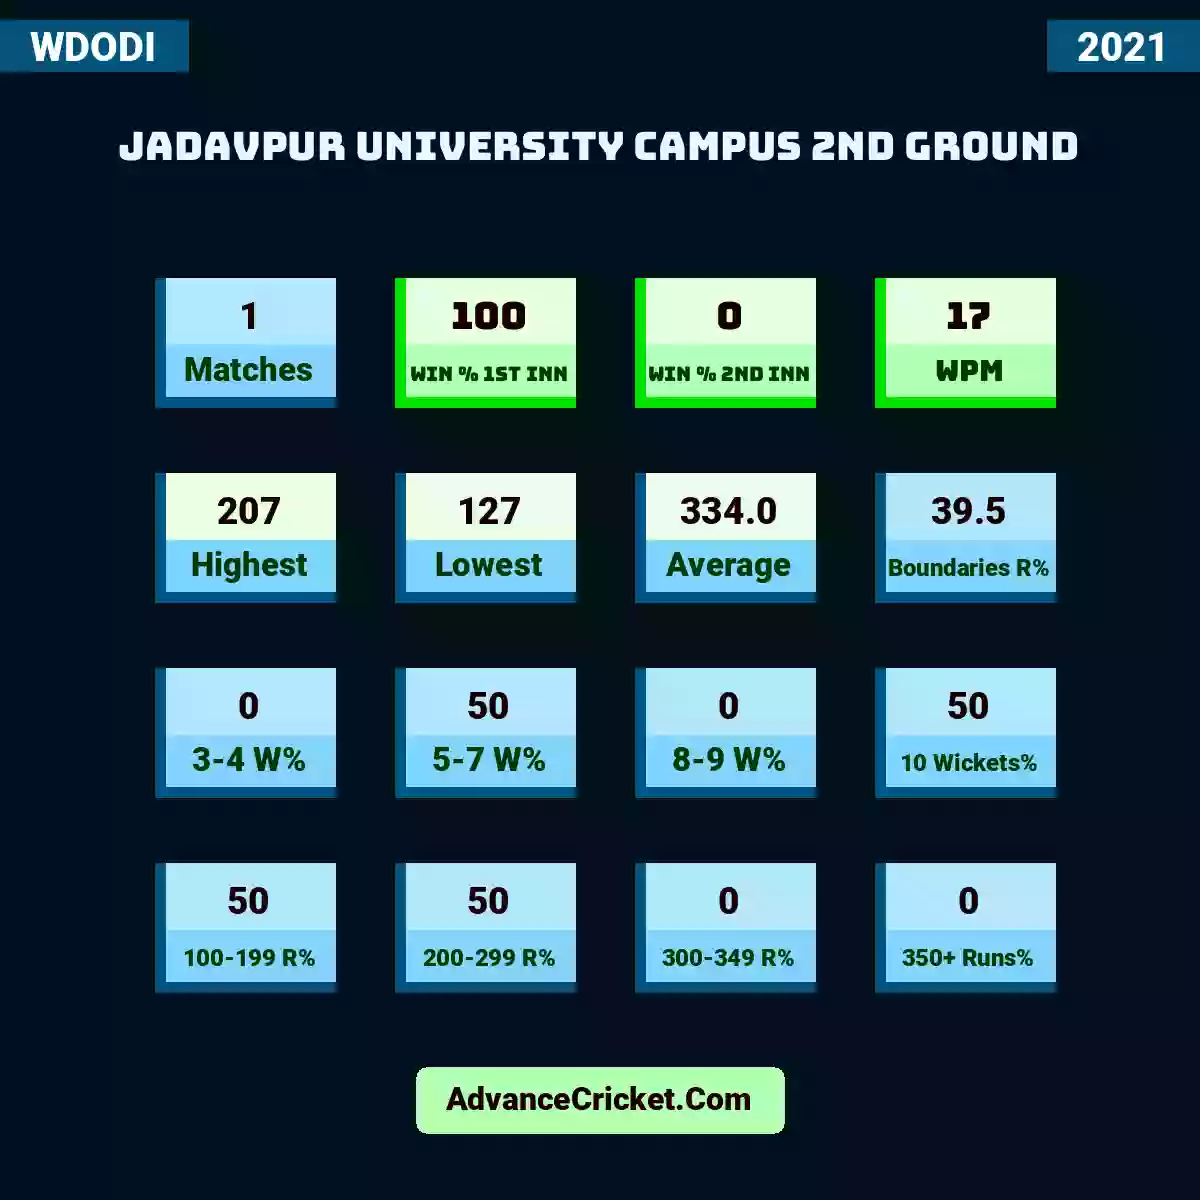 Image showing Jadavpur University Campus 2nd Ground with Matches: 1, Win % 1st Inn: 100, Win % 2nd Inn: 0, WPM: 17, Highest: 207, Lowest: 127, Average: 334.0, Boundaries R%: 39.5, 3-4 W%: 0, 5-7 W%: 50, 8-9 W%: 0, 10 Wickets%: 50, 100-199 R%: 50, 200-299 R%: 50, 300-349 R%: 0, 350+ Runs%: 0.